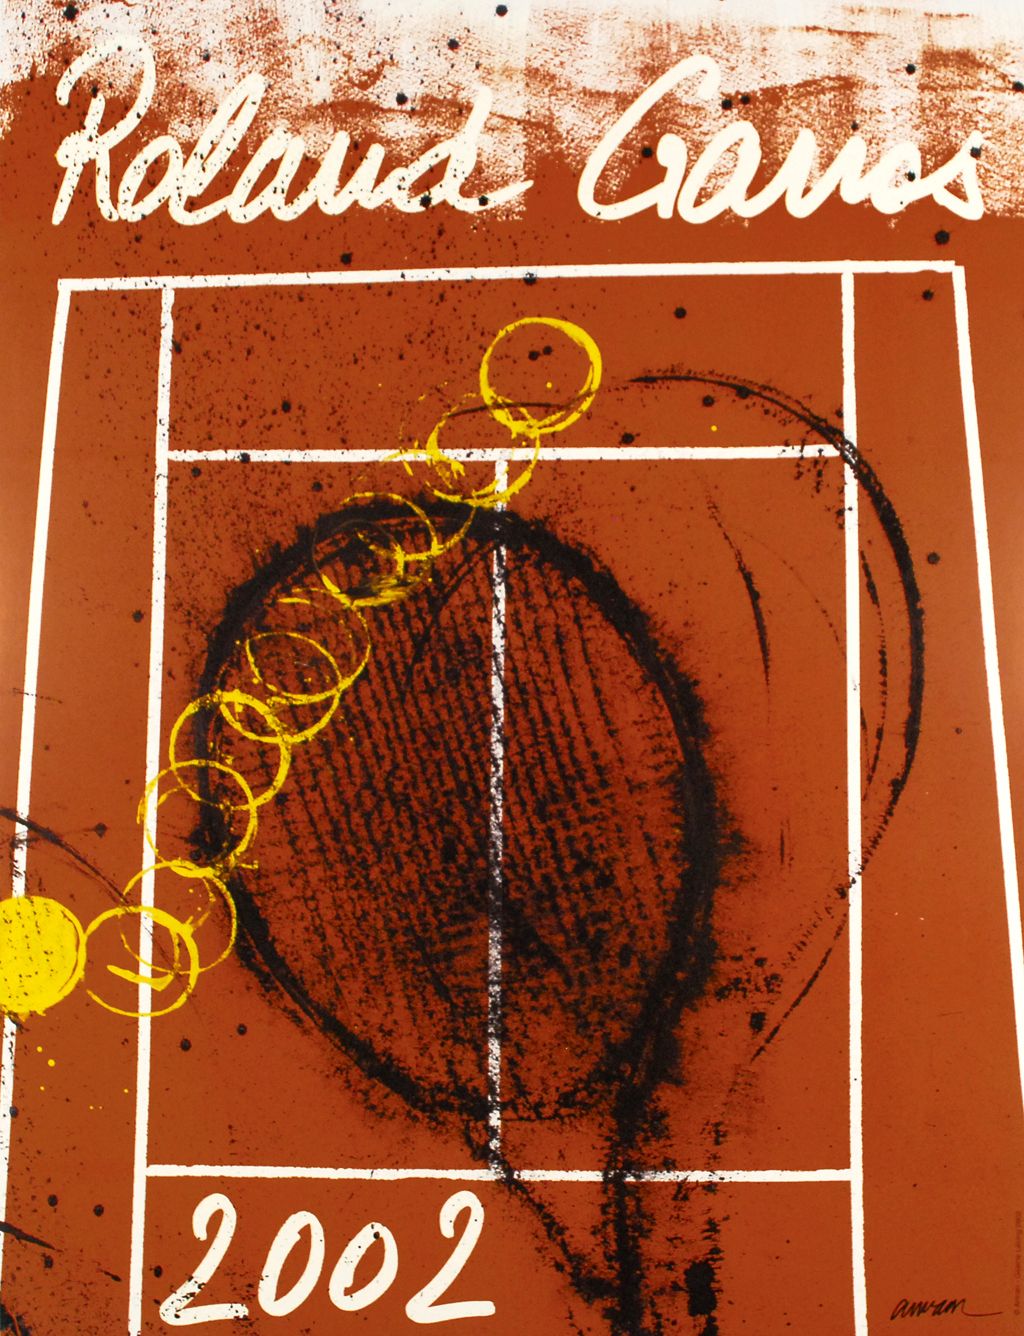 ARMAN 阿尔曼-费尔南德斯 (1928 - 2005)

罗兰-加洛斯，2002年

由Galerie Lelong出版的胶印海报，并在板块的右下角签名。
&hellip;